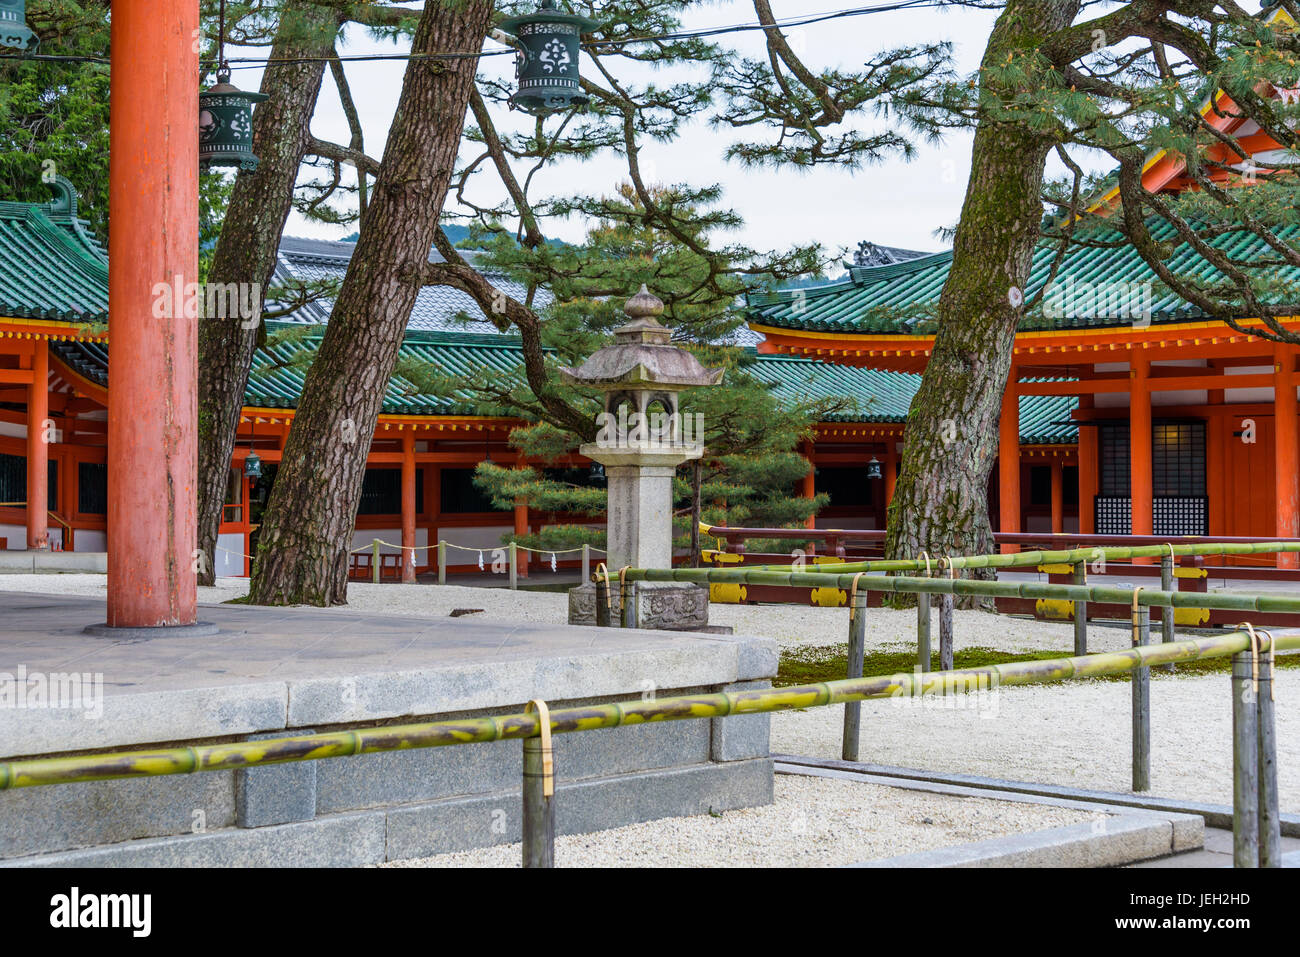 Heian Jingu shrine stone lantern and buildings. Stock Photo